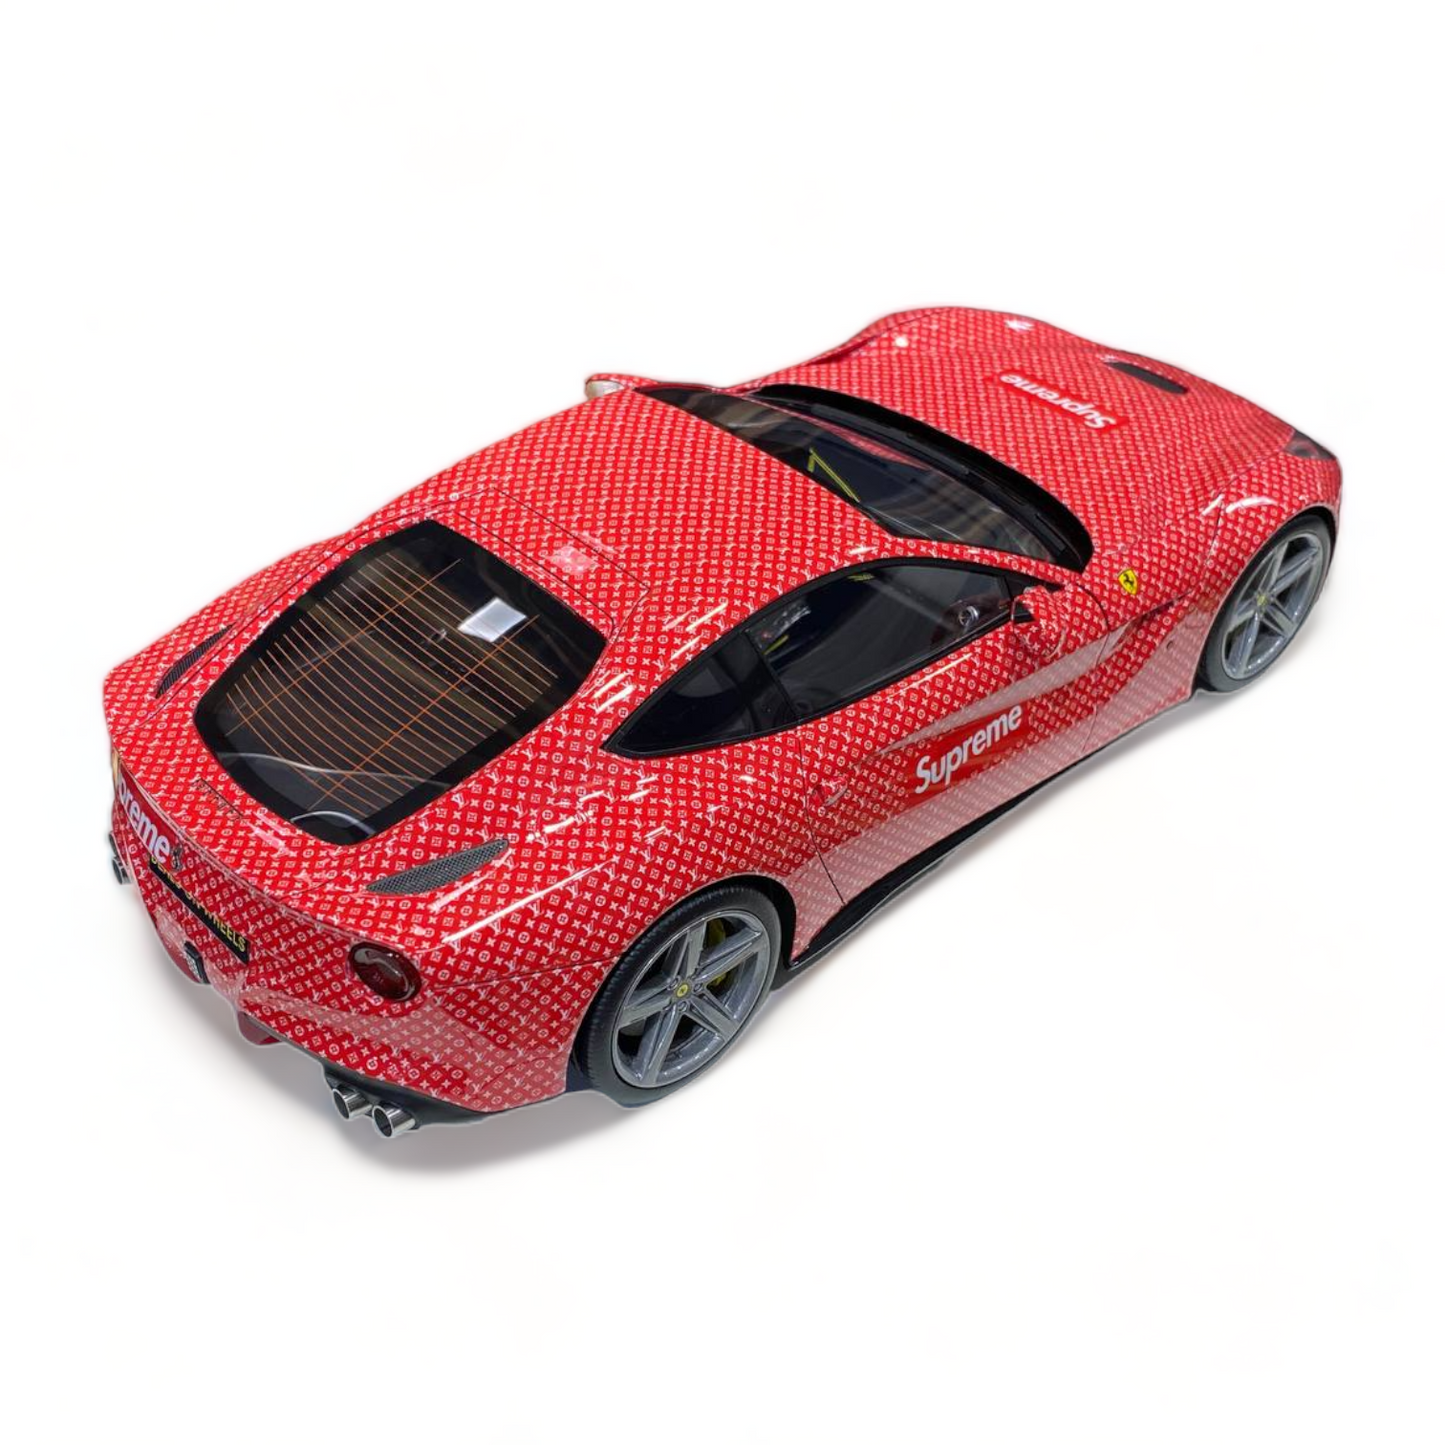 Ferrari F12 Berlinetta LV Supreme Red 1/18 By VV Models|Sold in Dturman.com Dubai UAE.